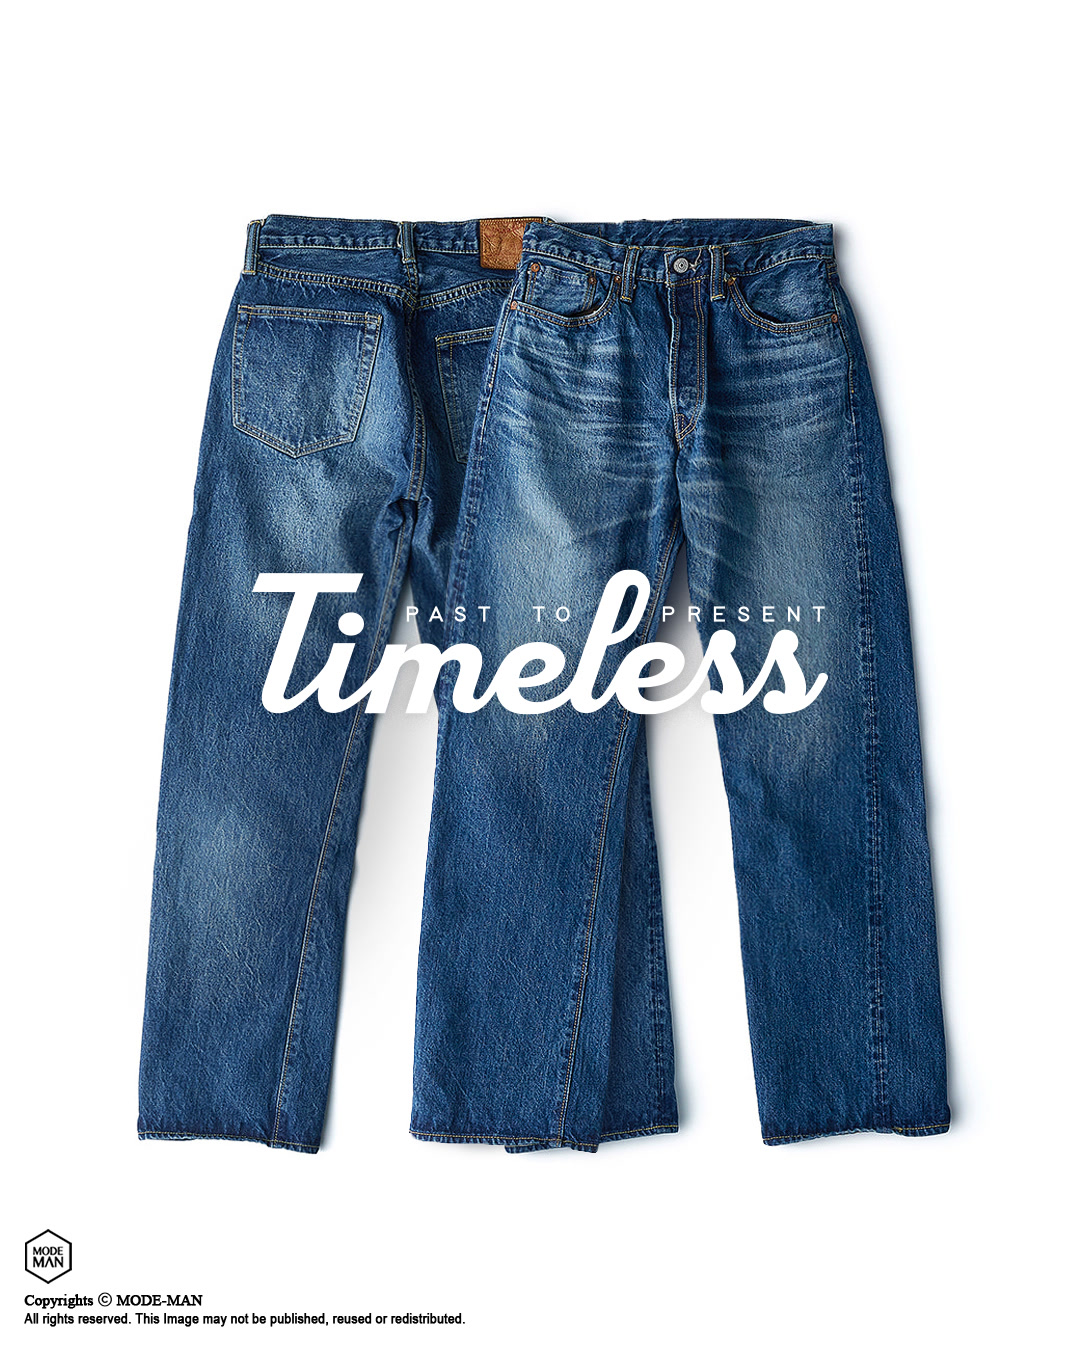 ملك كانبيرا هذه jeans mode - tamarasubdivision.com